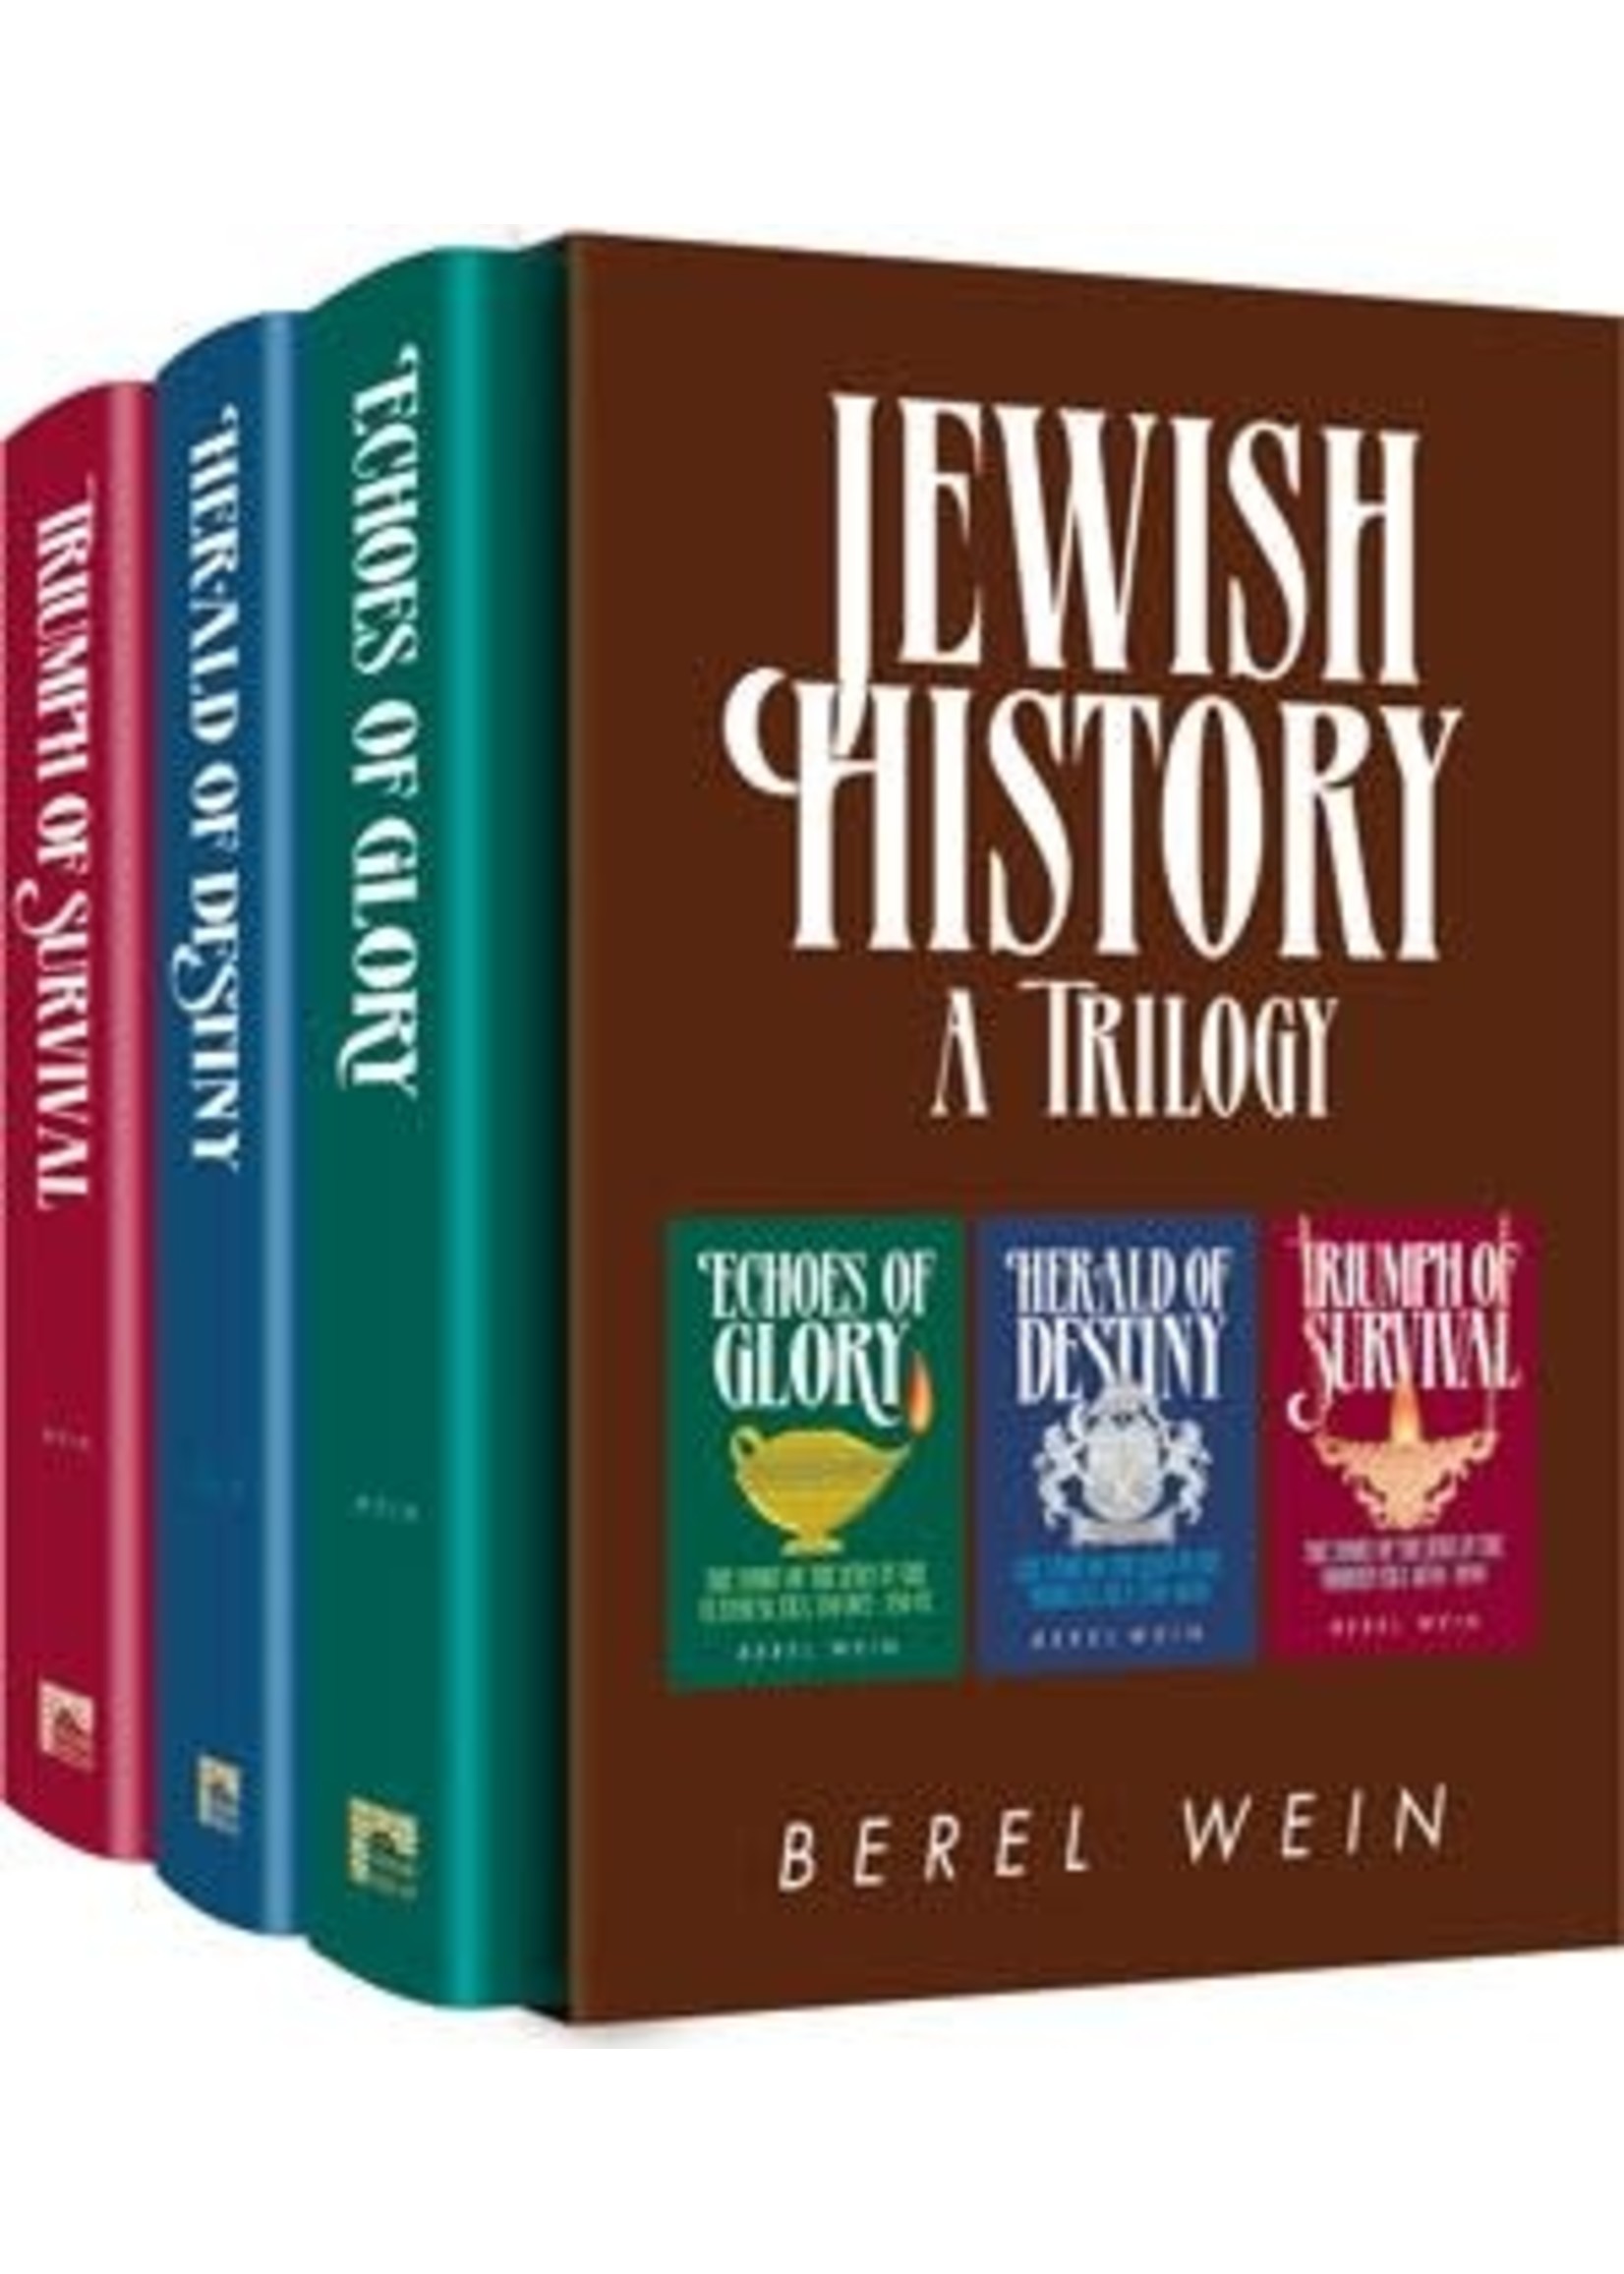 JEWISH HISTROY - A TRILOGY